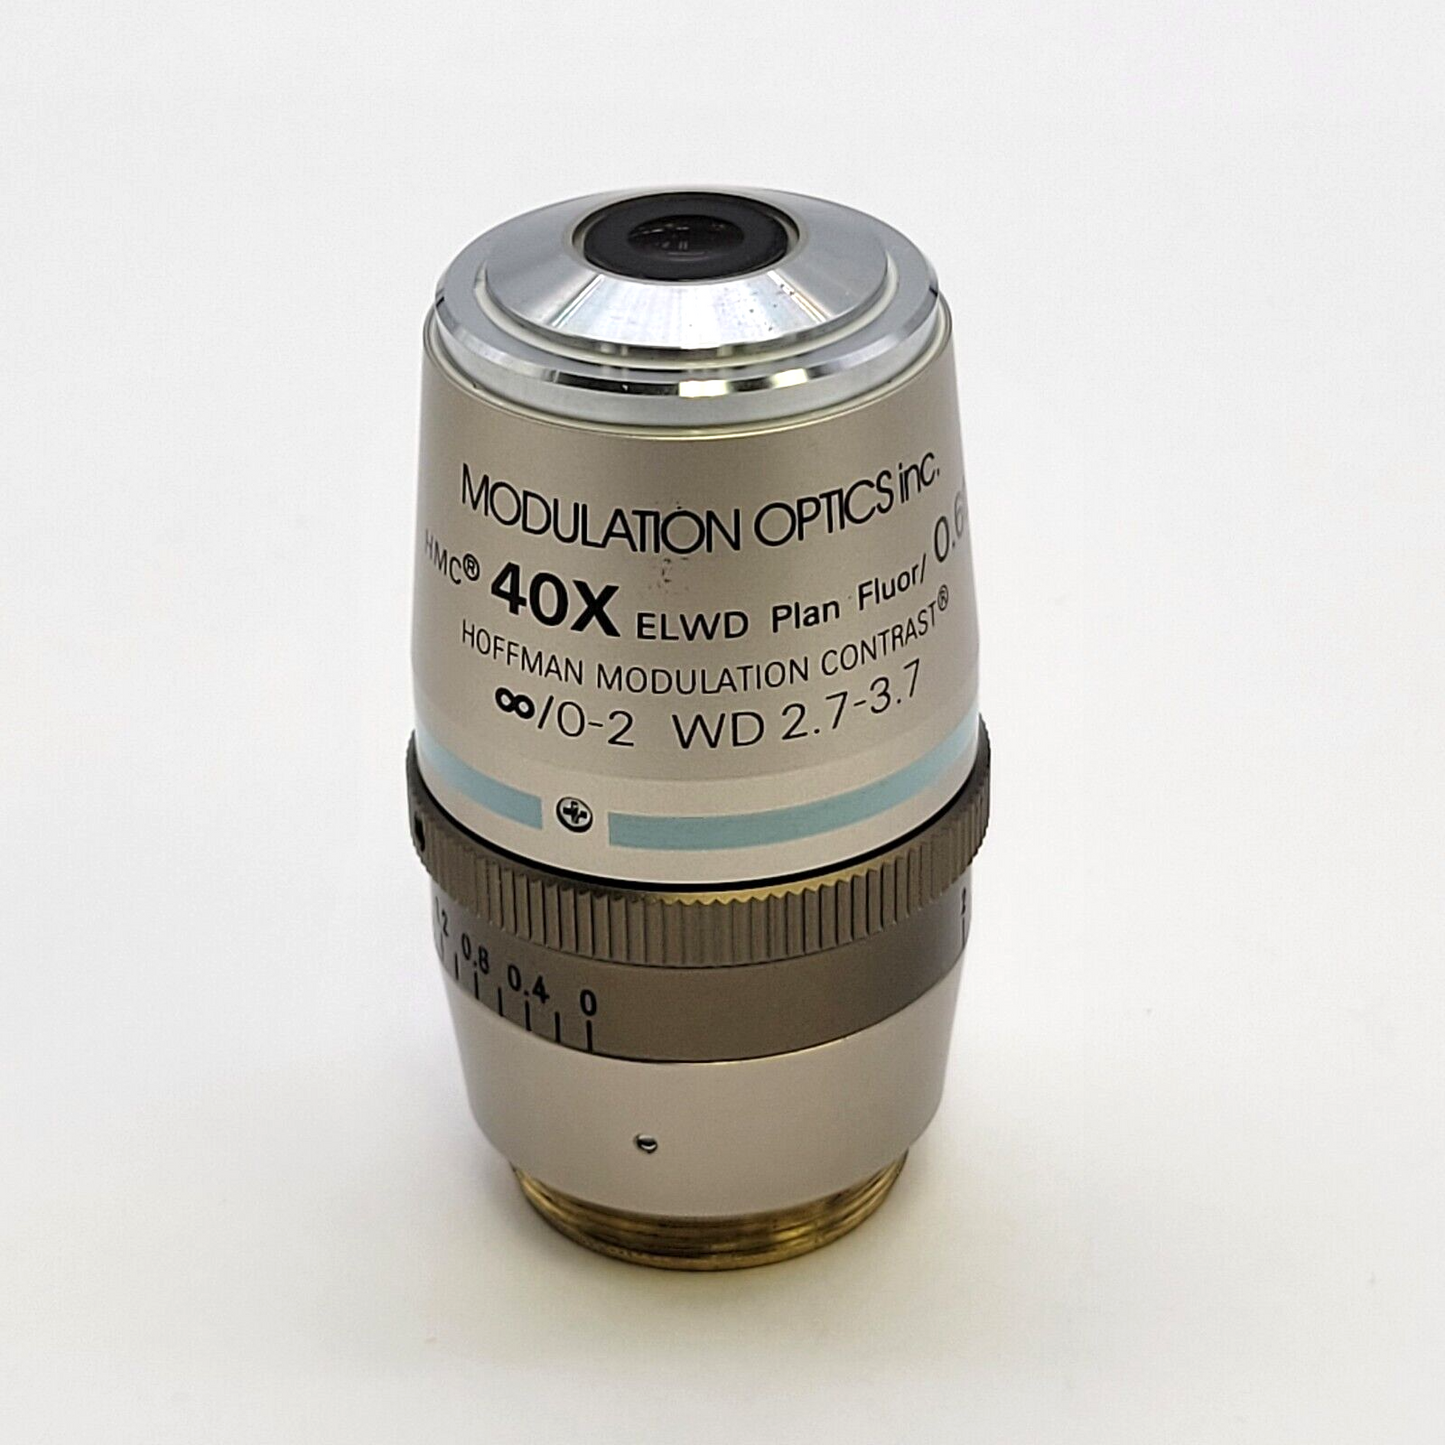 Nikon Microscope Objective Hoffman Modulation Contrast 40x ELWD Plan Fluor - microscopemarketplace